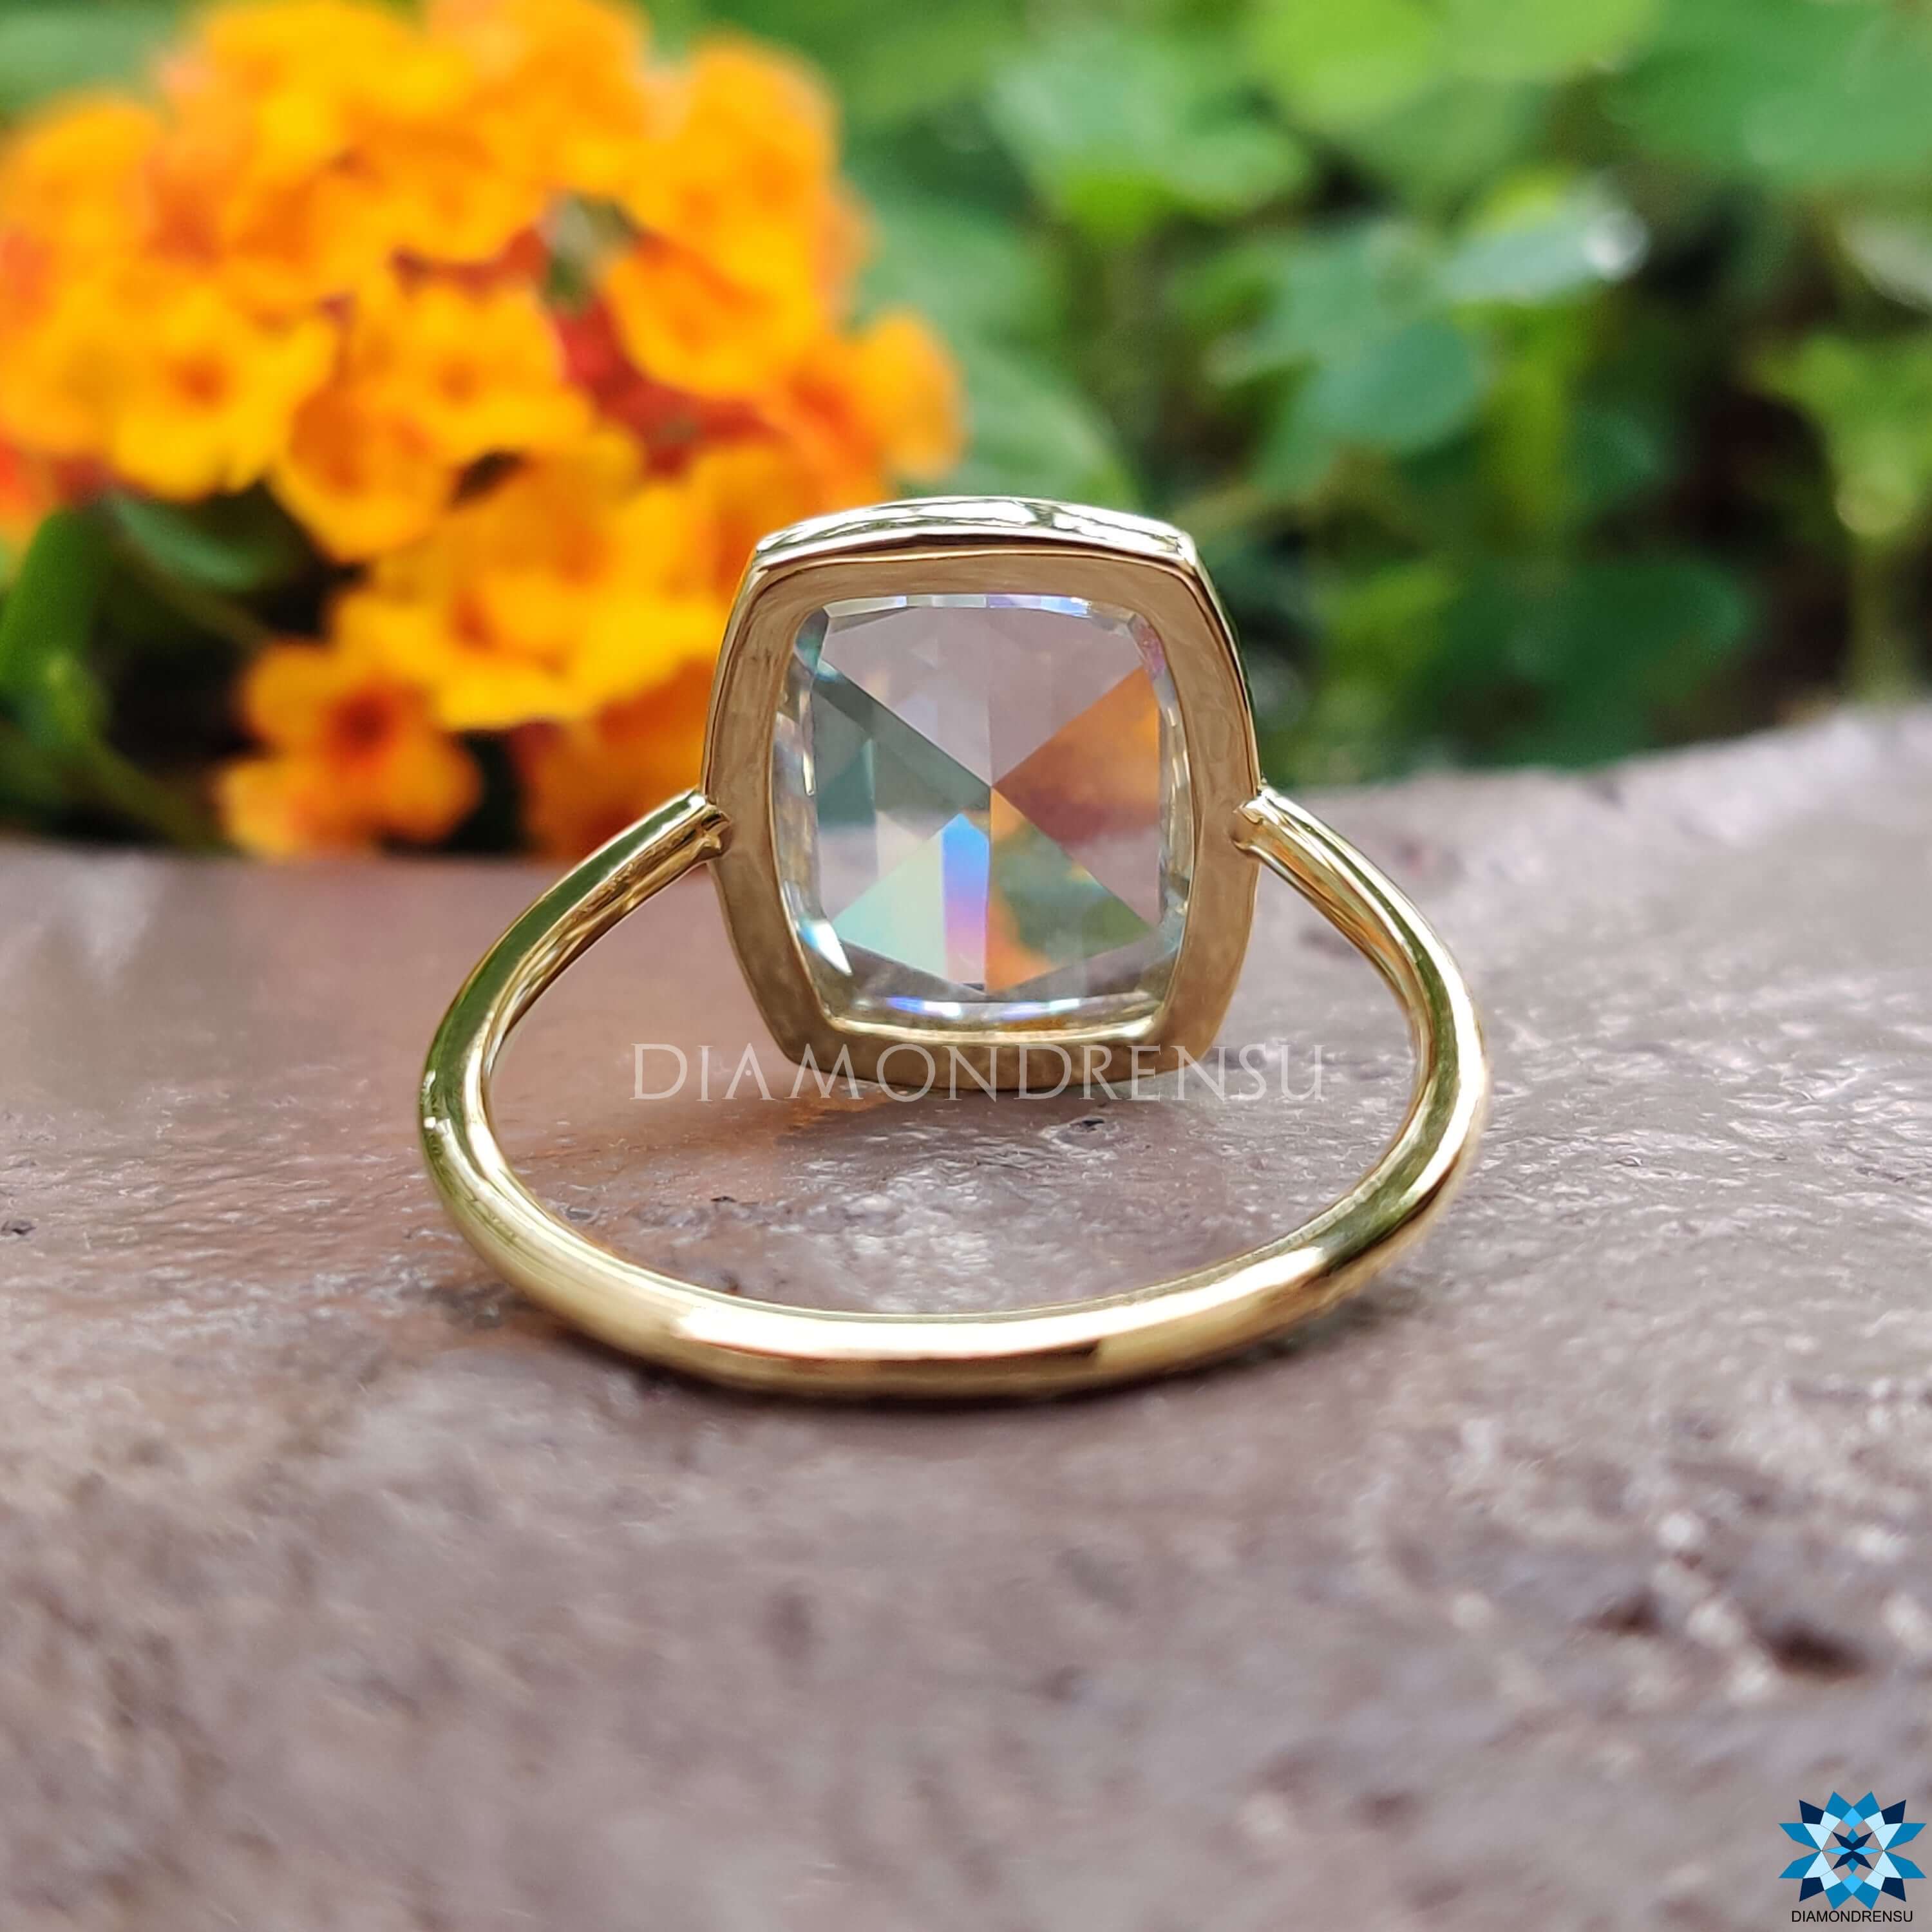 create your own custom moissanite ring - diamondrensu